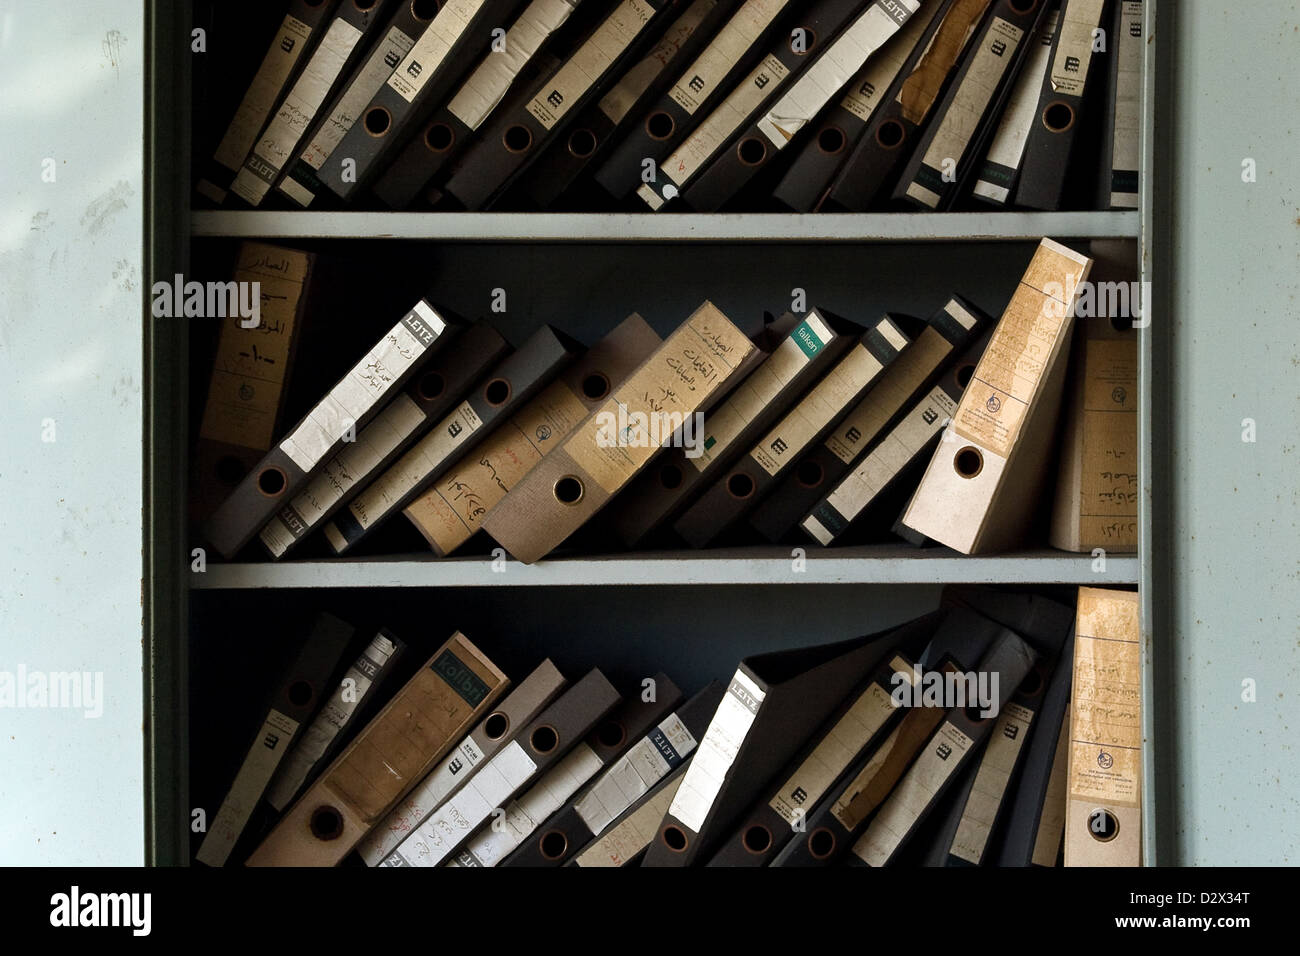 Berlin, Germany back, easy-going file folders on a shelf Stock Photo